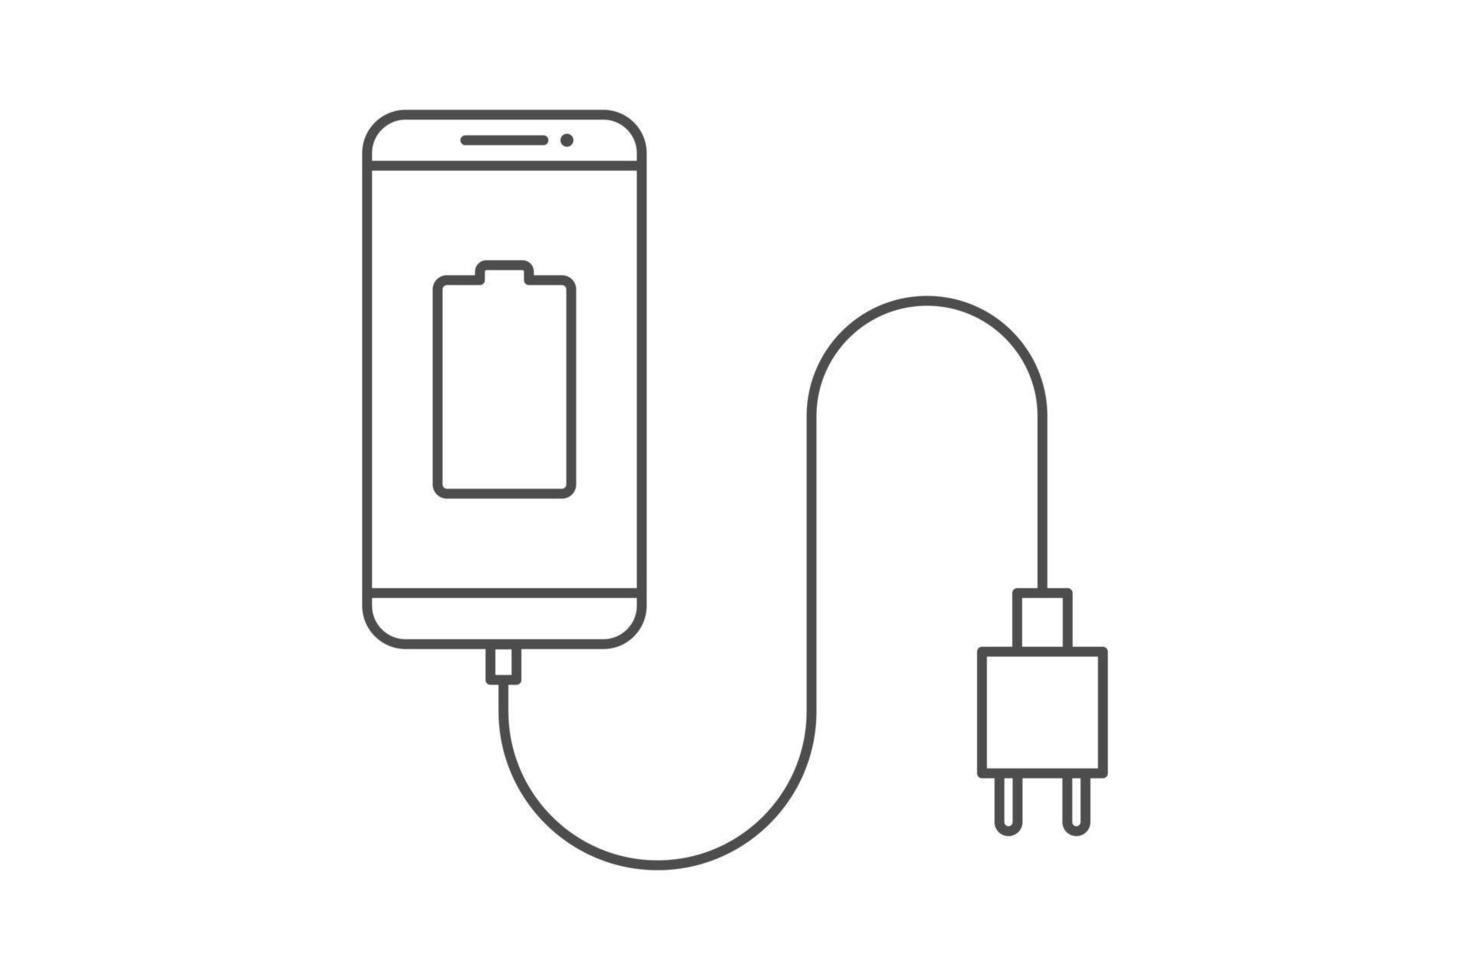 teléfono inteligente cargador adaptador línea icono firmar símbolo vector, teléfono inteligente, eléctrico enchufe, adaptador, bajo batería notificación vector